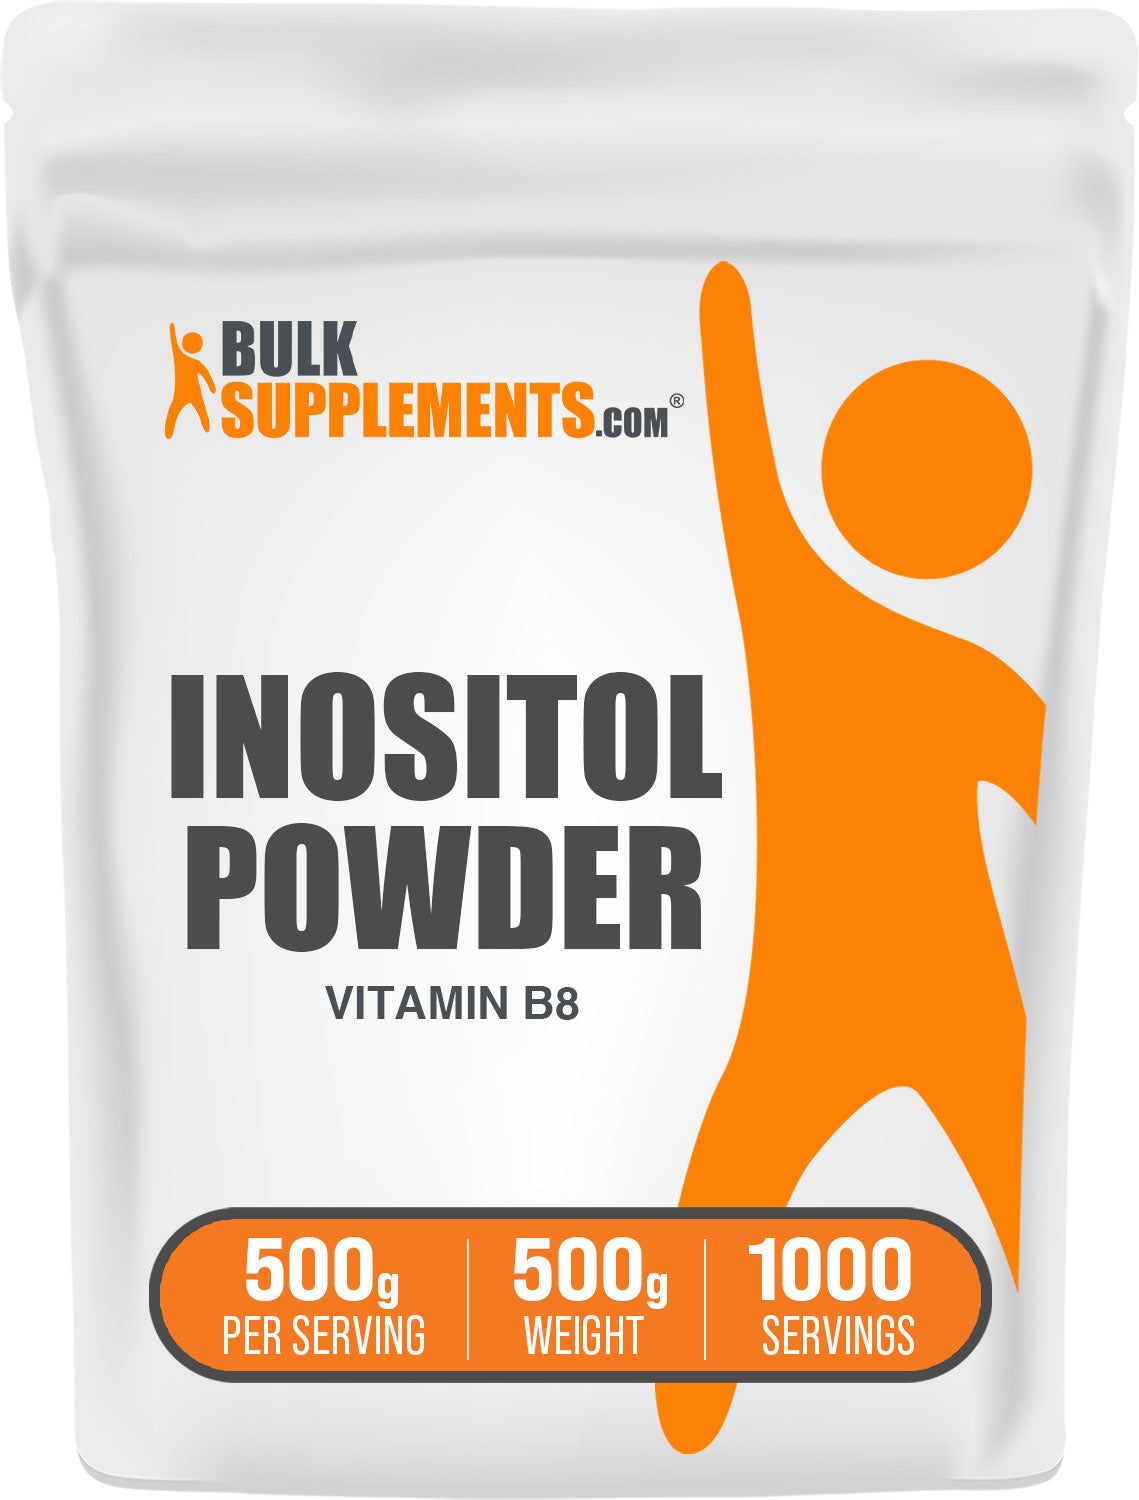 Inositol Powder Vitamin B8 500g